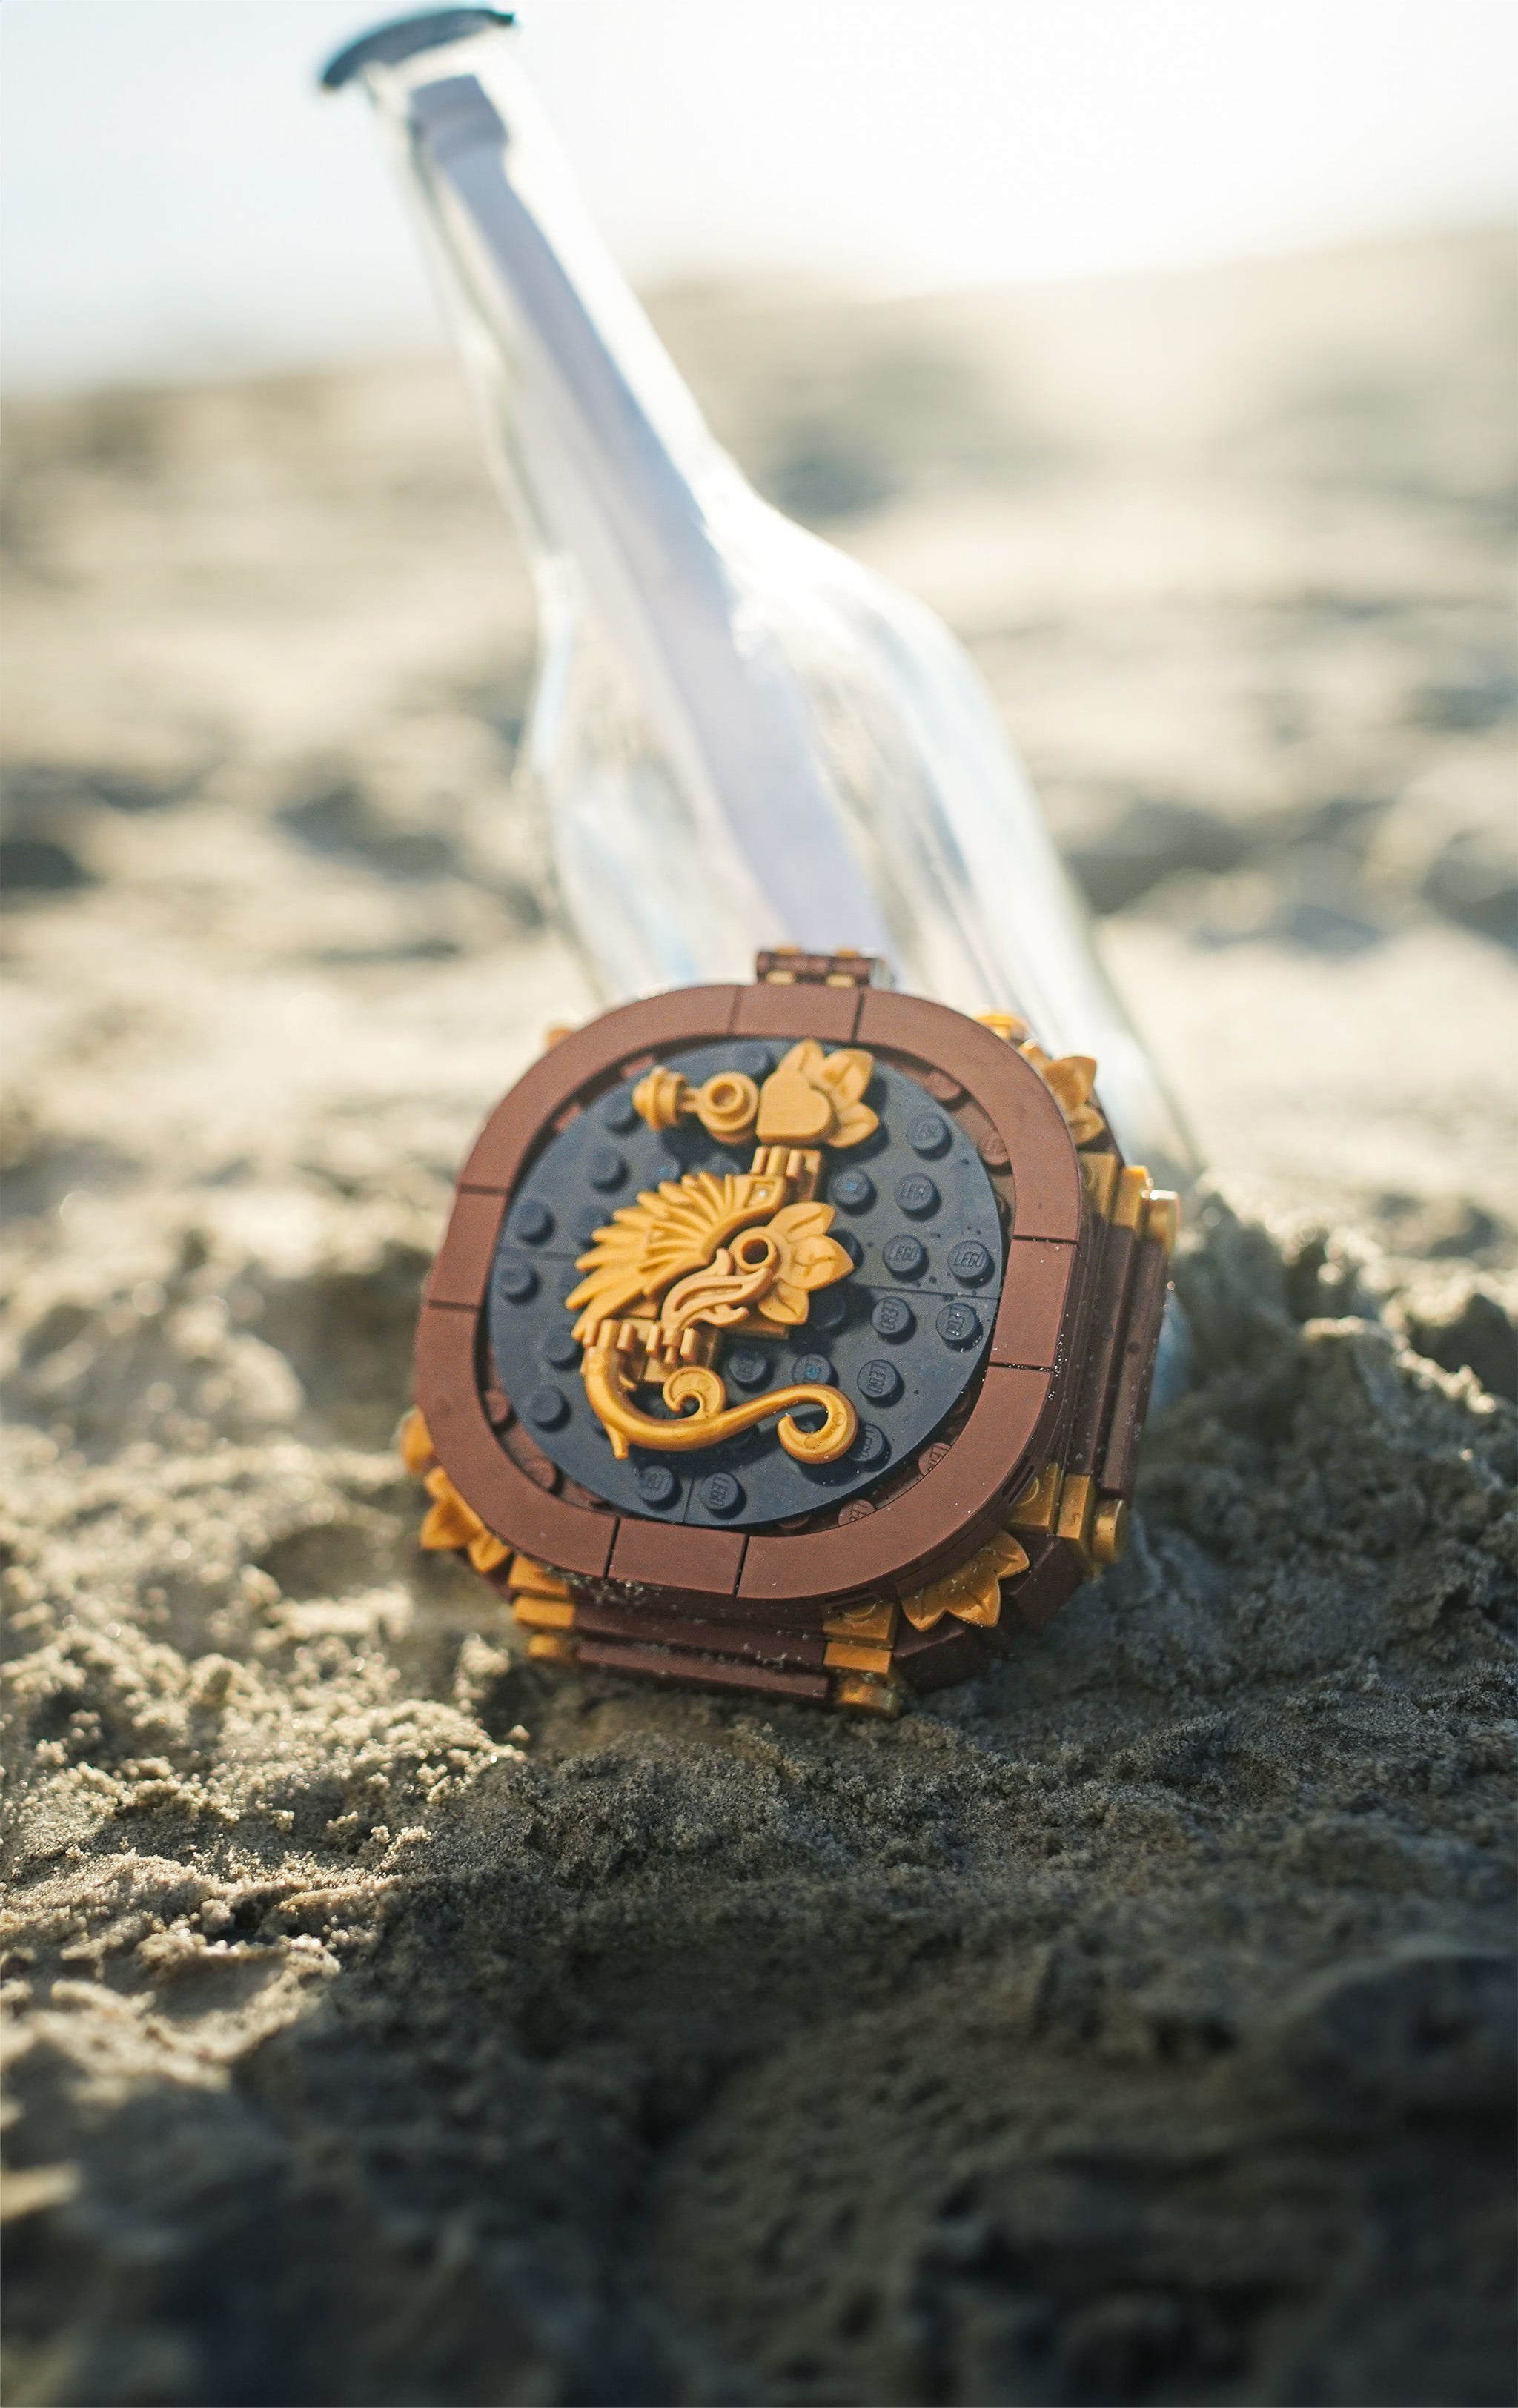 Pirate Compass in LEGO Bricks by Bricker Builds on beach